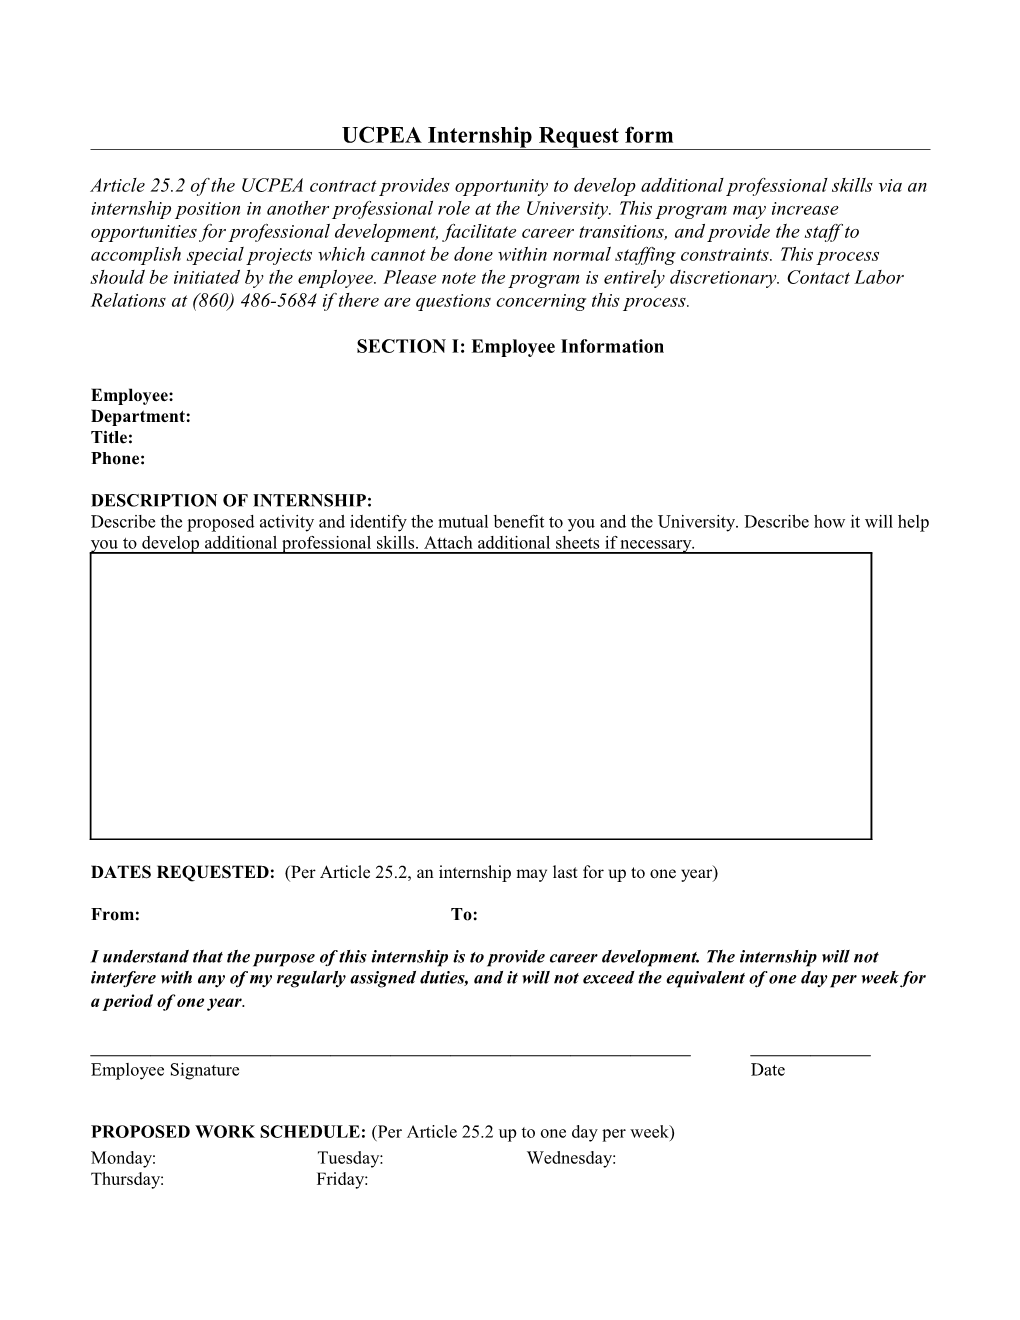 UCPEA Internship Request Form